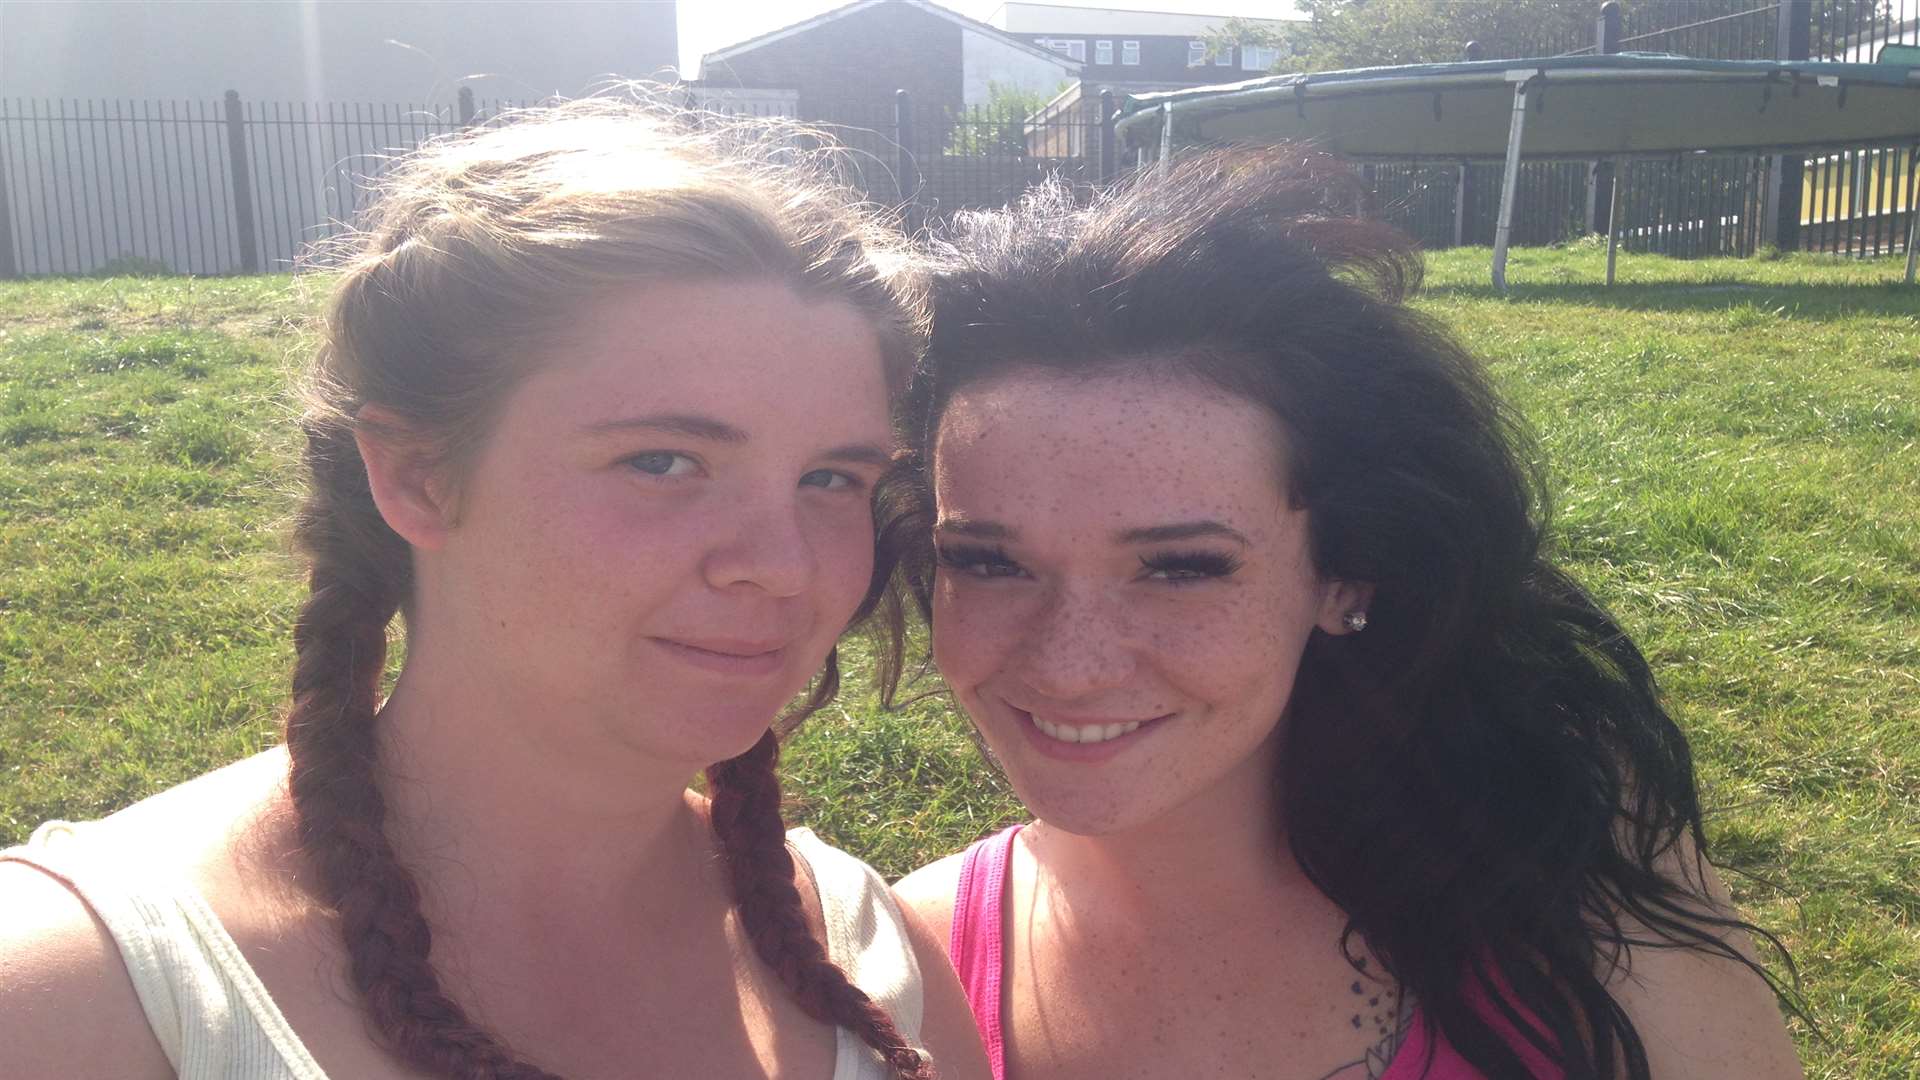 Stephanie Bridger 22 and Sasha Healey, 19, both live in the flats.